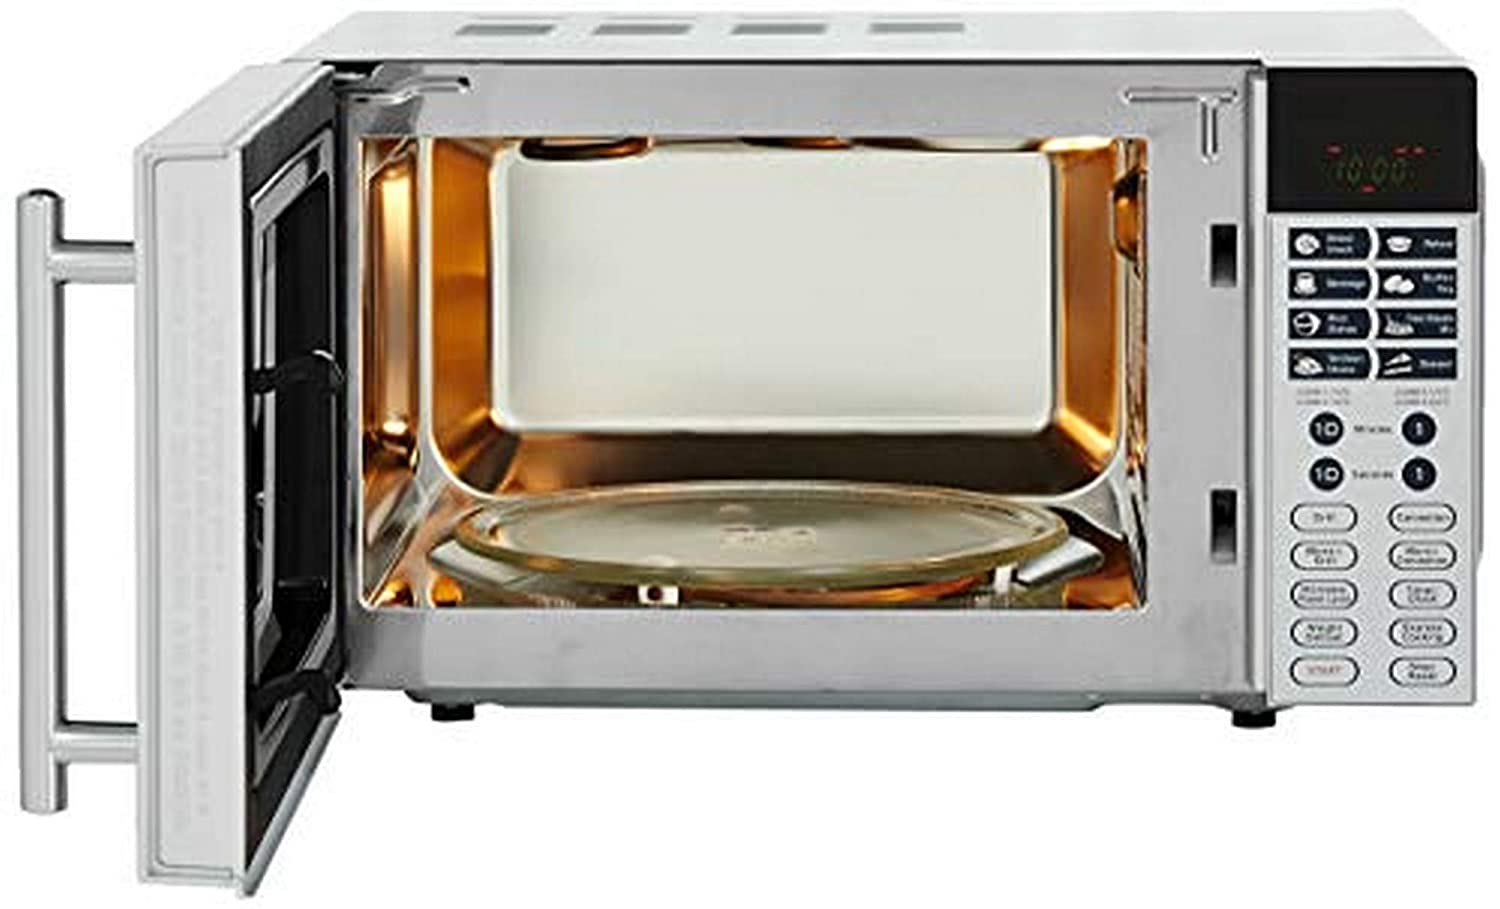 IFB 20 L Convection Microwave Oven (20SC2, Metallic Silver) - Mahajan Electronics Online